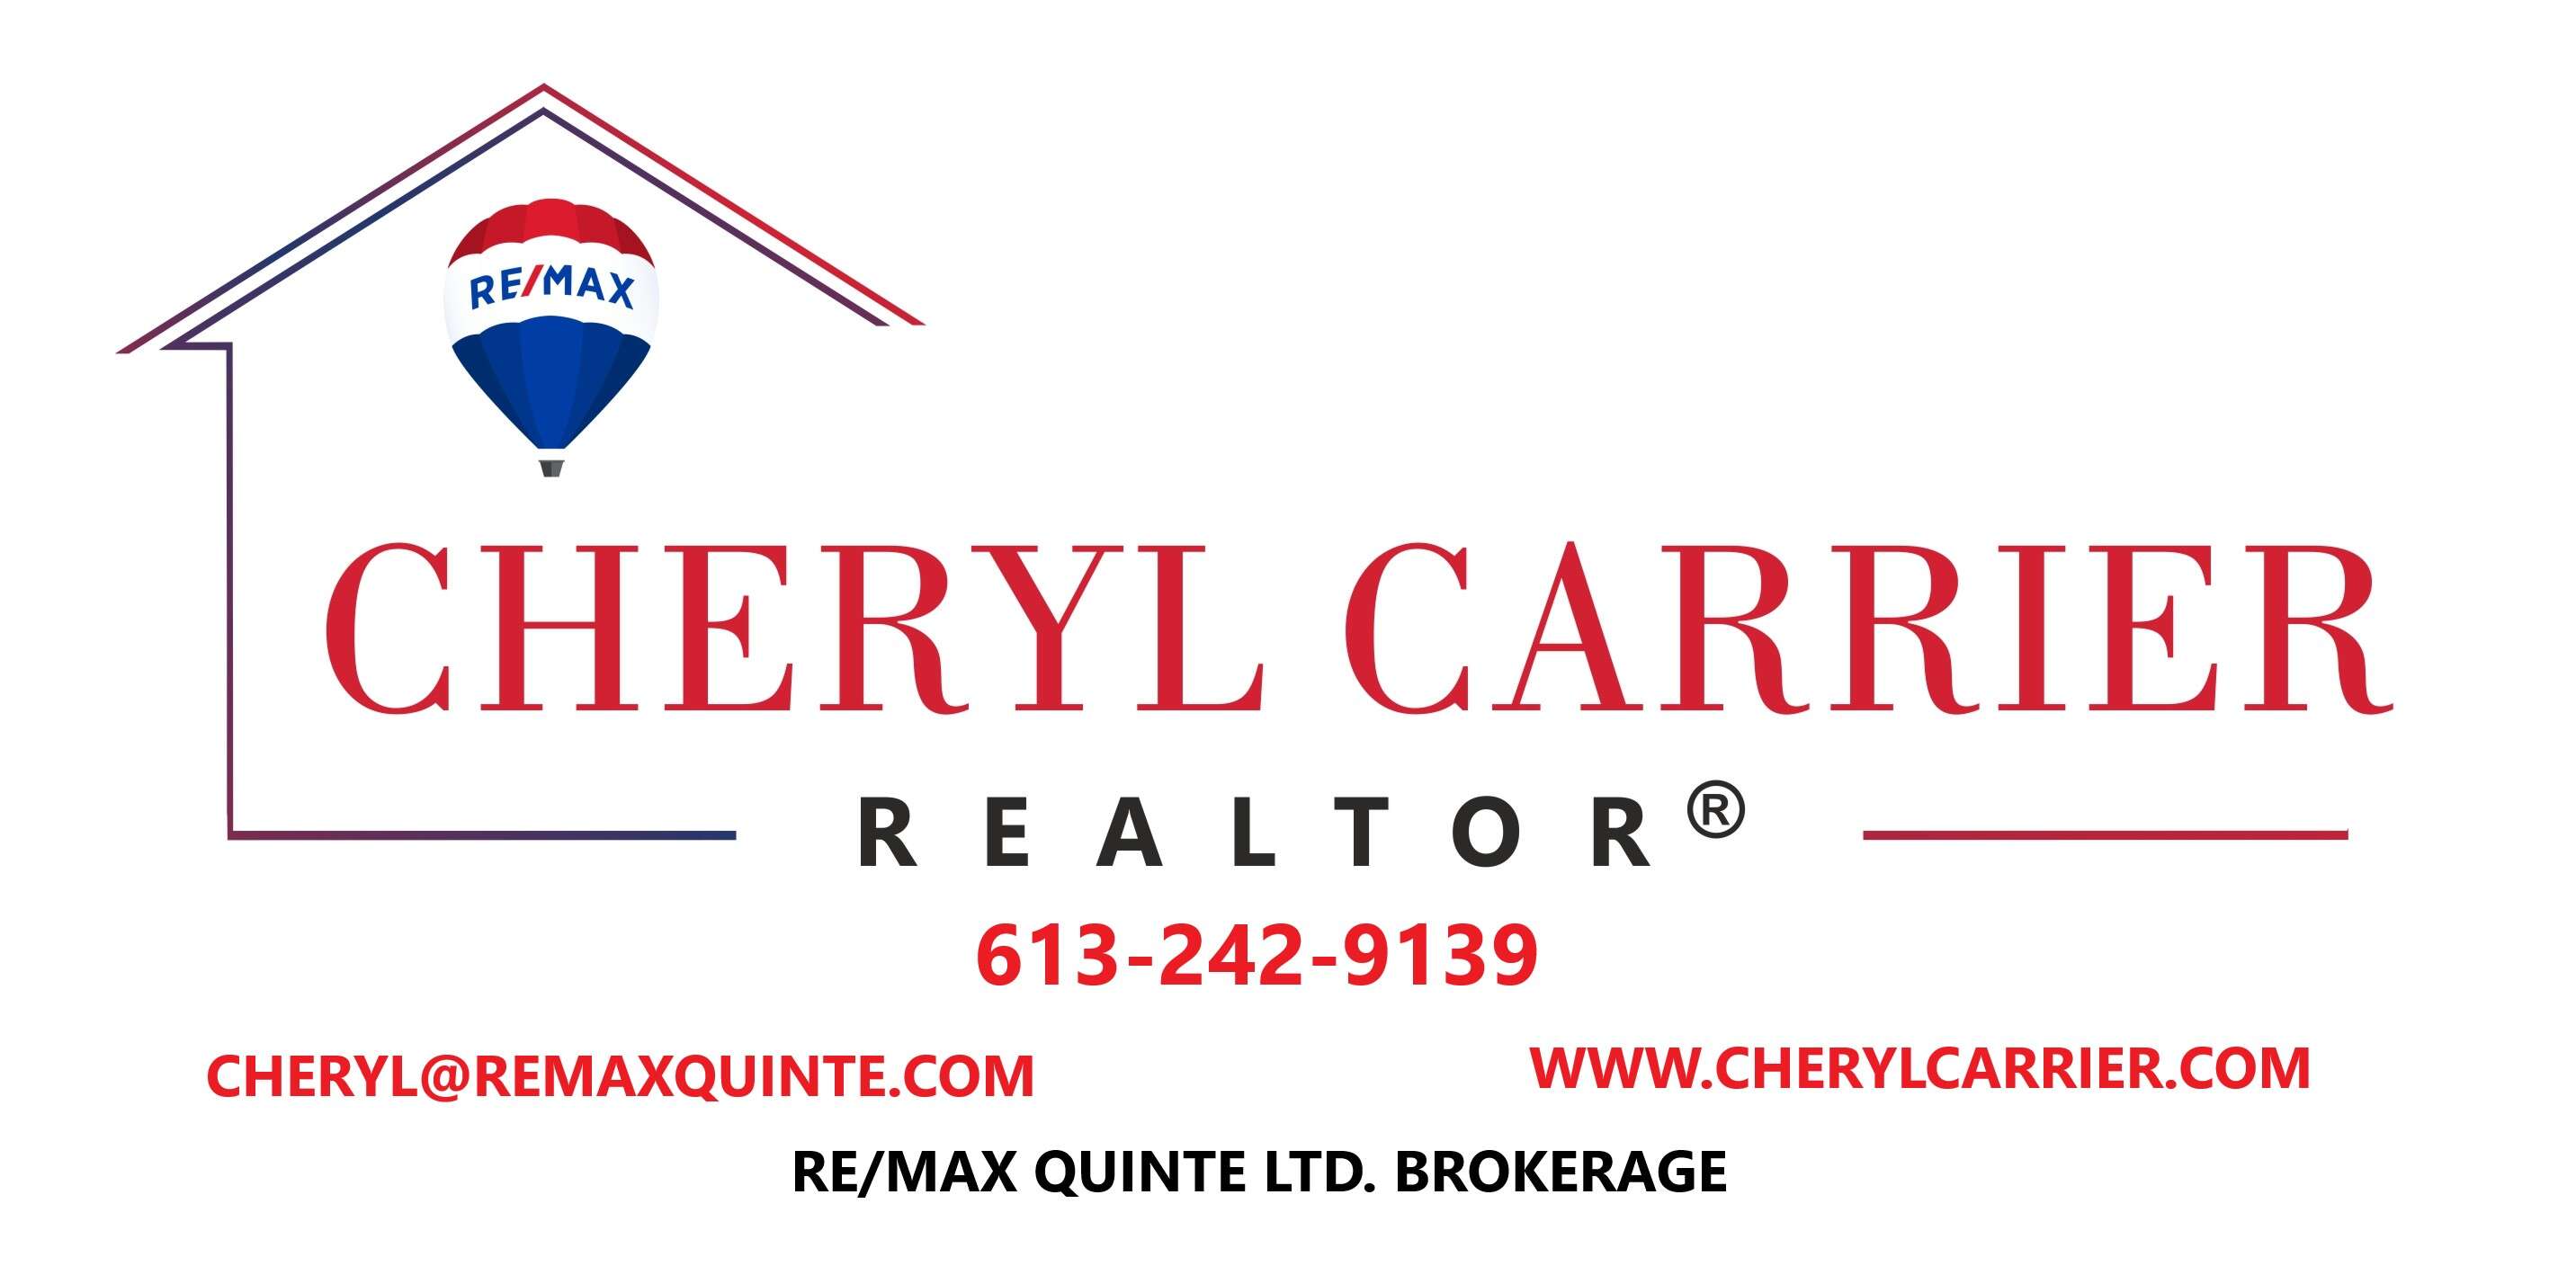 RE/MAX Quinte Ltd. Cheryl Carrier REALOTR®